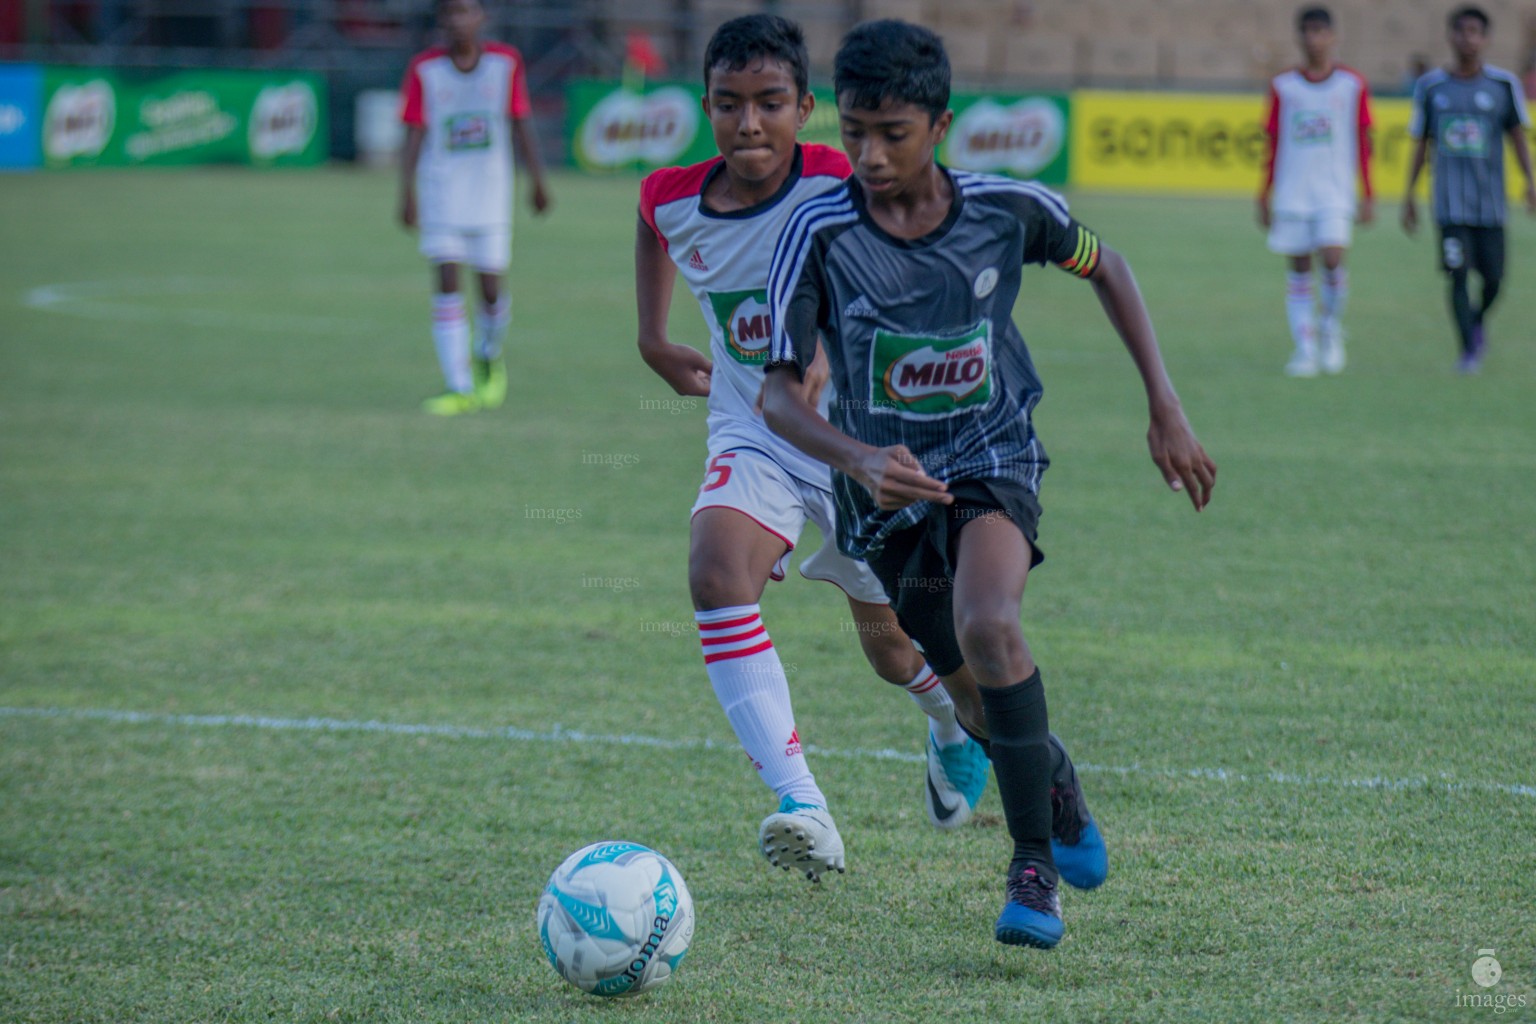 Milo Inter-school U14 Football 2017 Final on 2nd October 2017, Ahmadhiyya vs Iskandhar School (Photos: Ismail Thoriq and Hassan Simah/Images.mv)